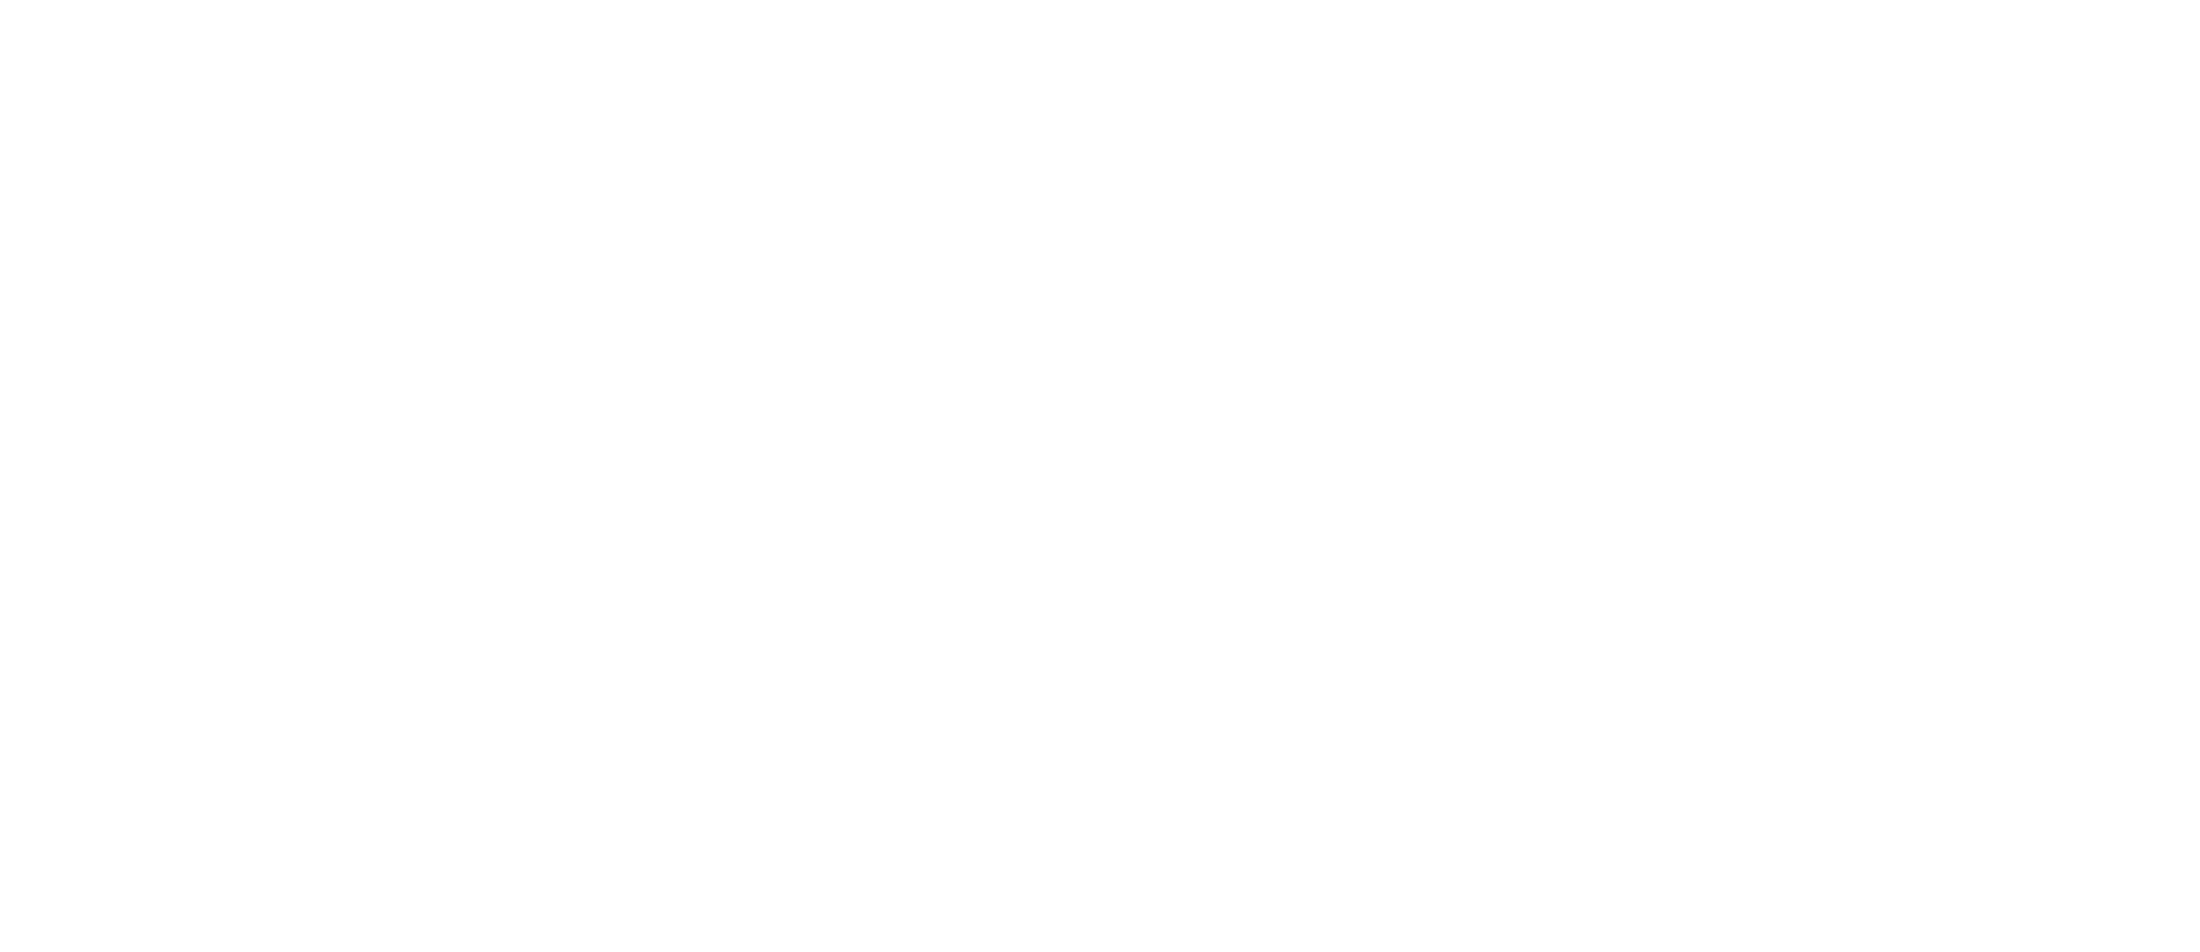 SFIA accredited partner logo white